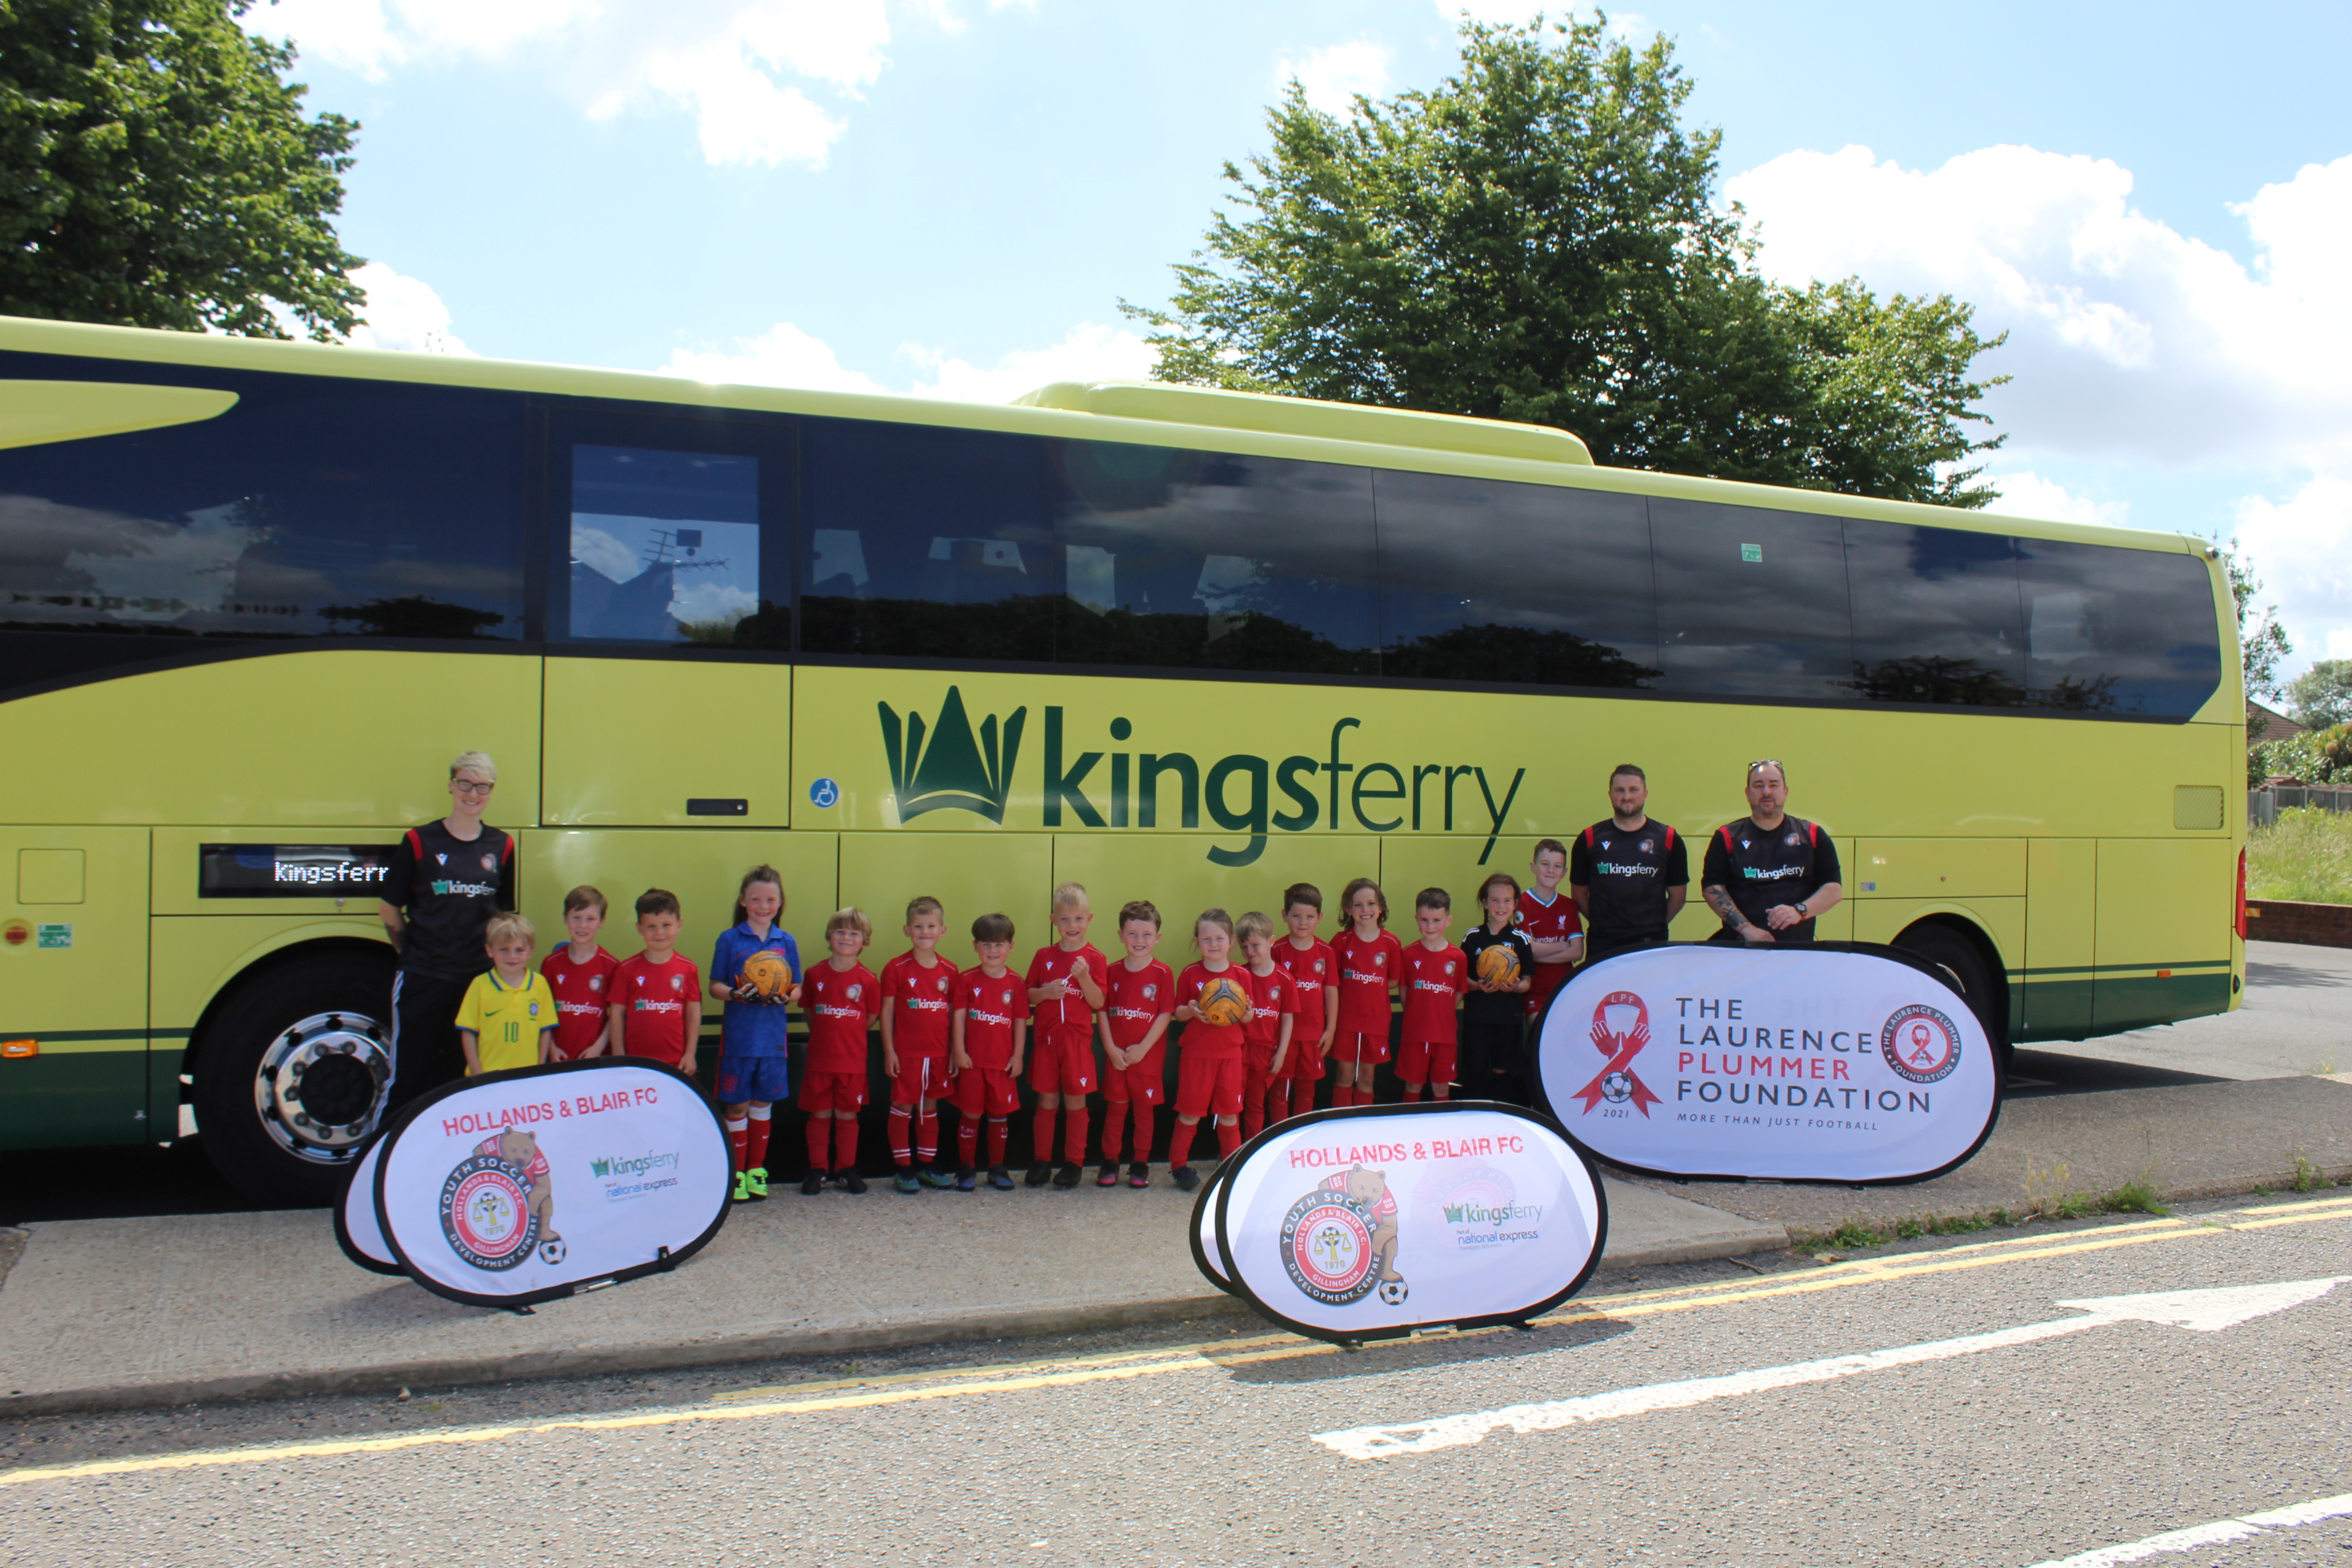 The Kings Ferry sponsors football school